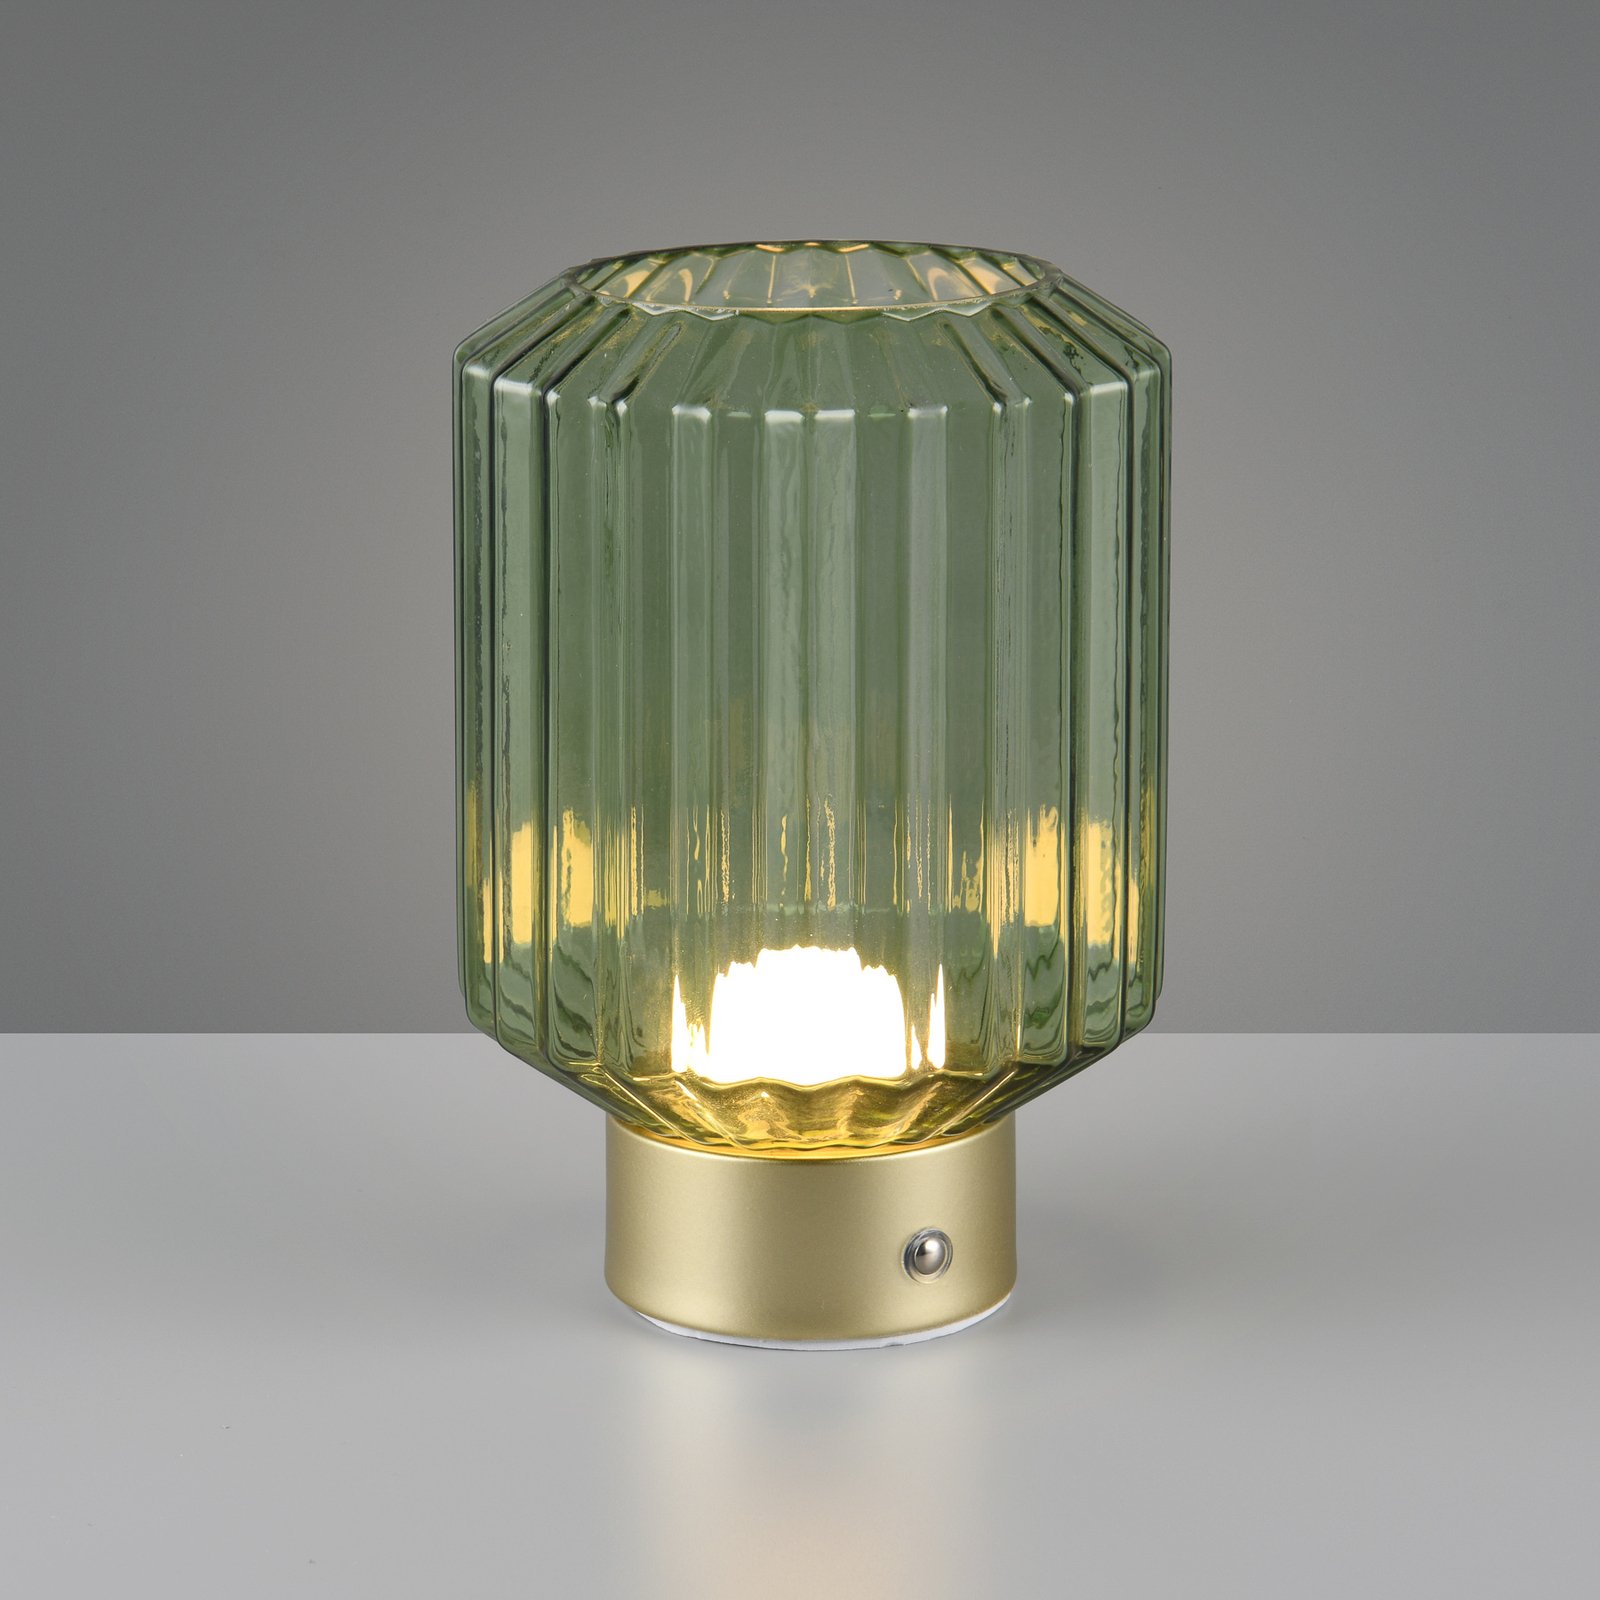 Lord LED uppladdningsbar bordslampa, mässing/grön, höjd 19,5 cm, glas